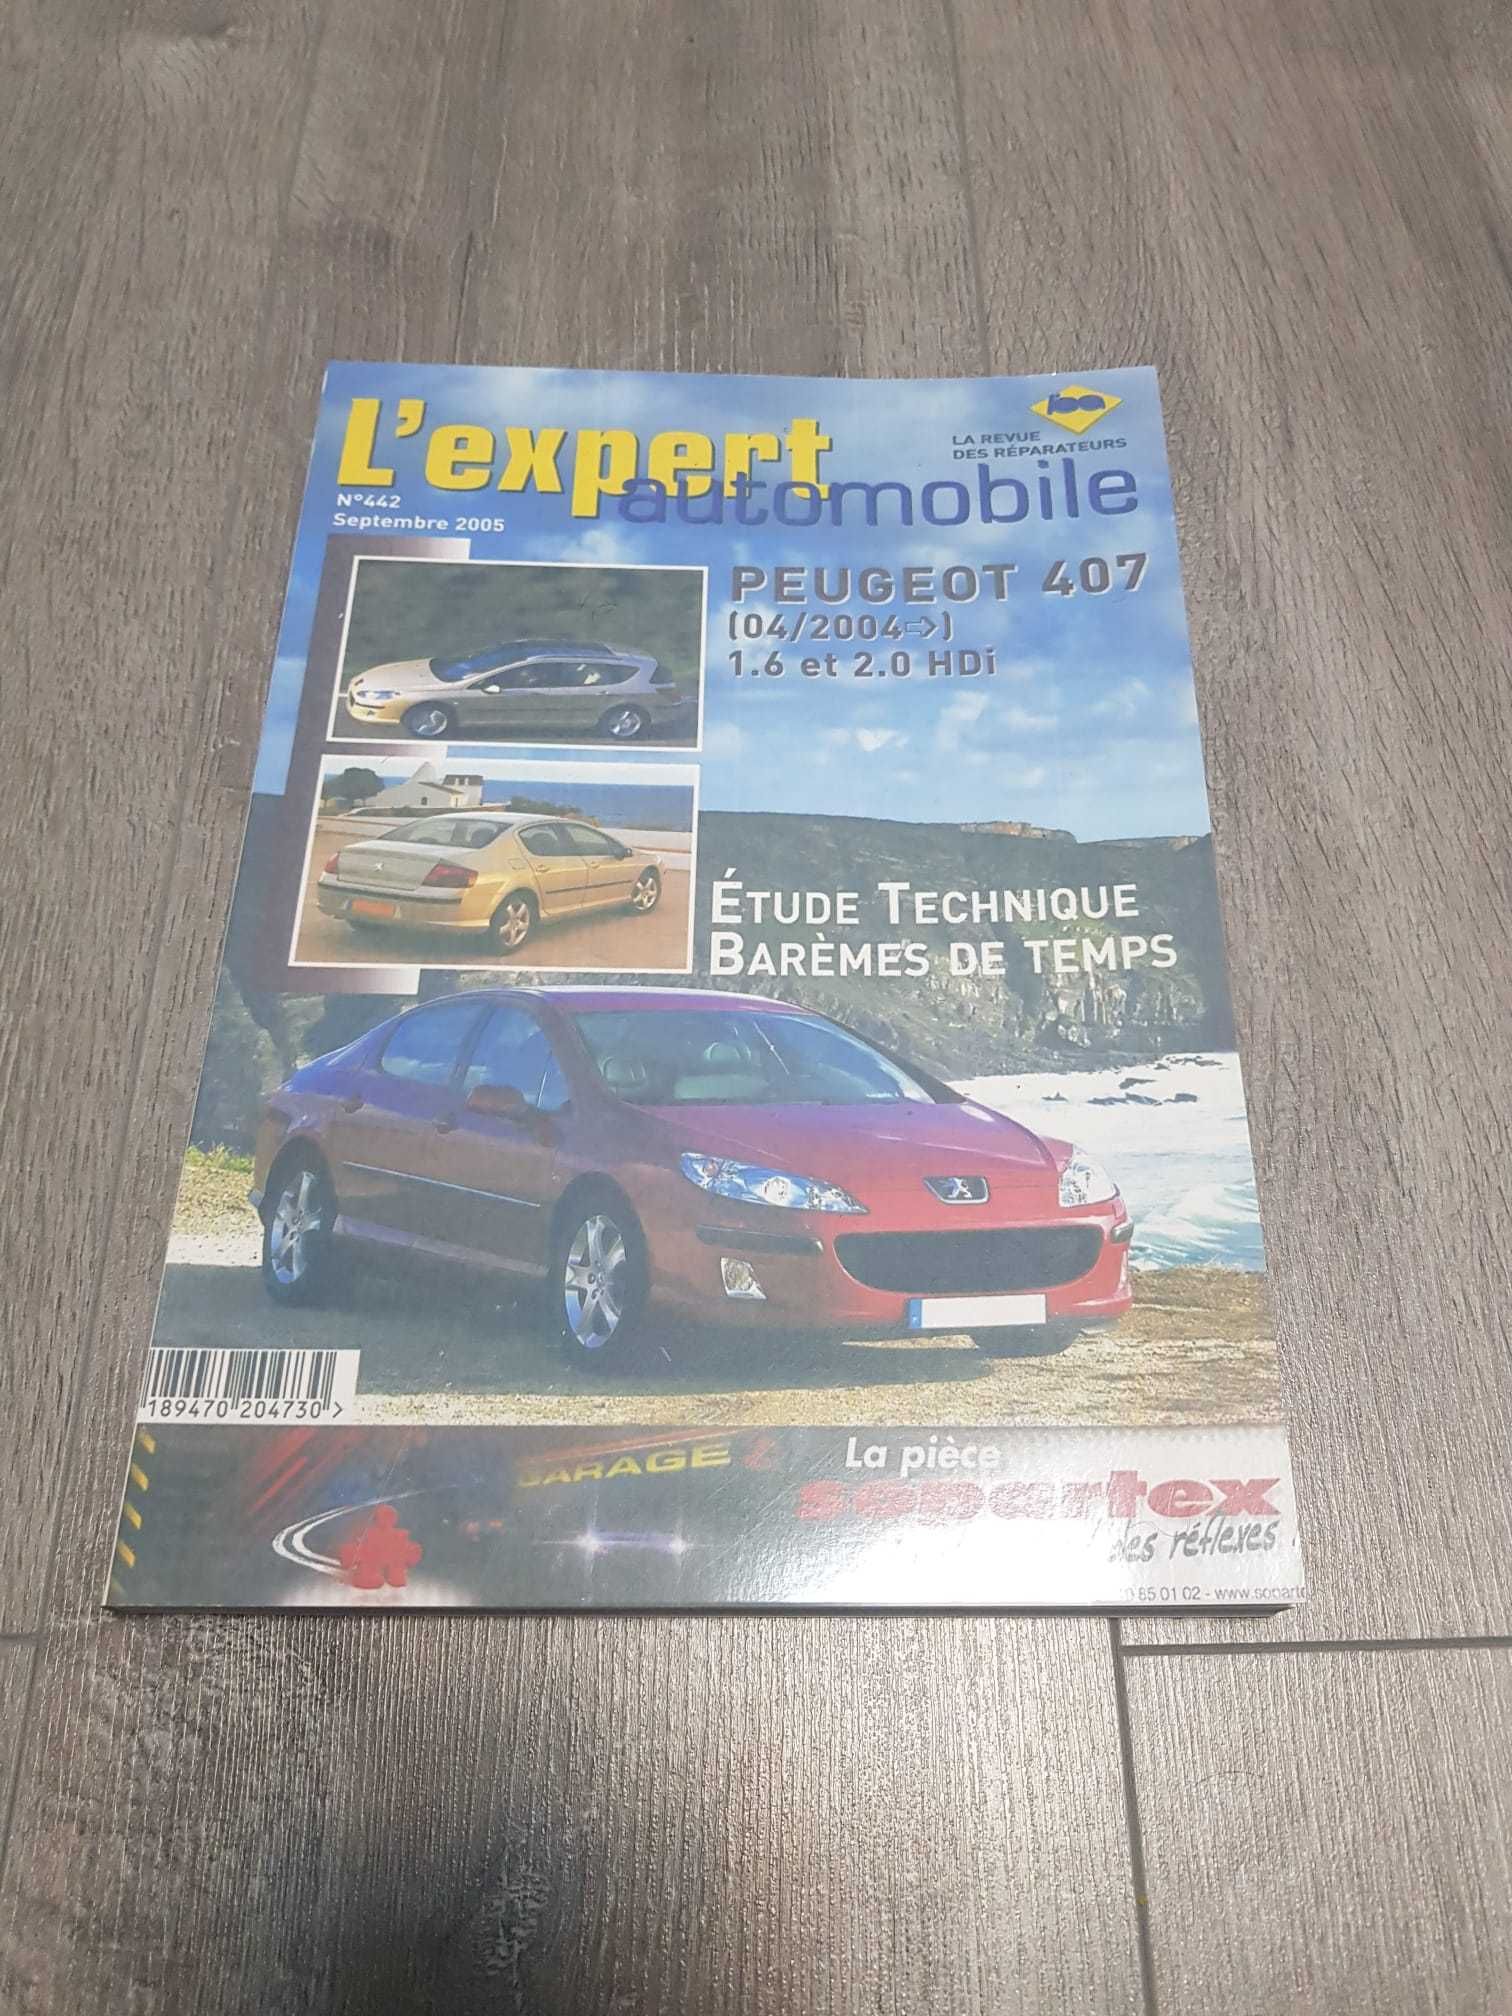 Manual reparatii Peugeot 407 (1.6 si 2.0 HDI) in limba franceza